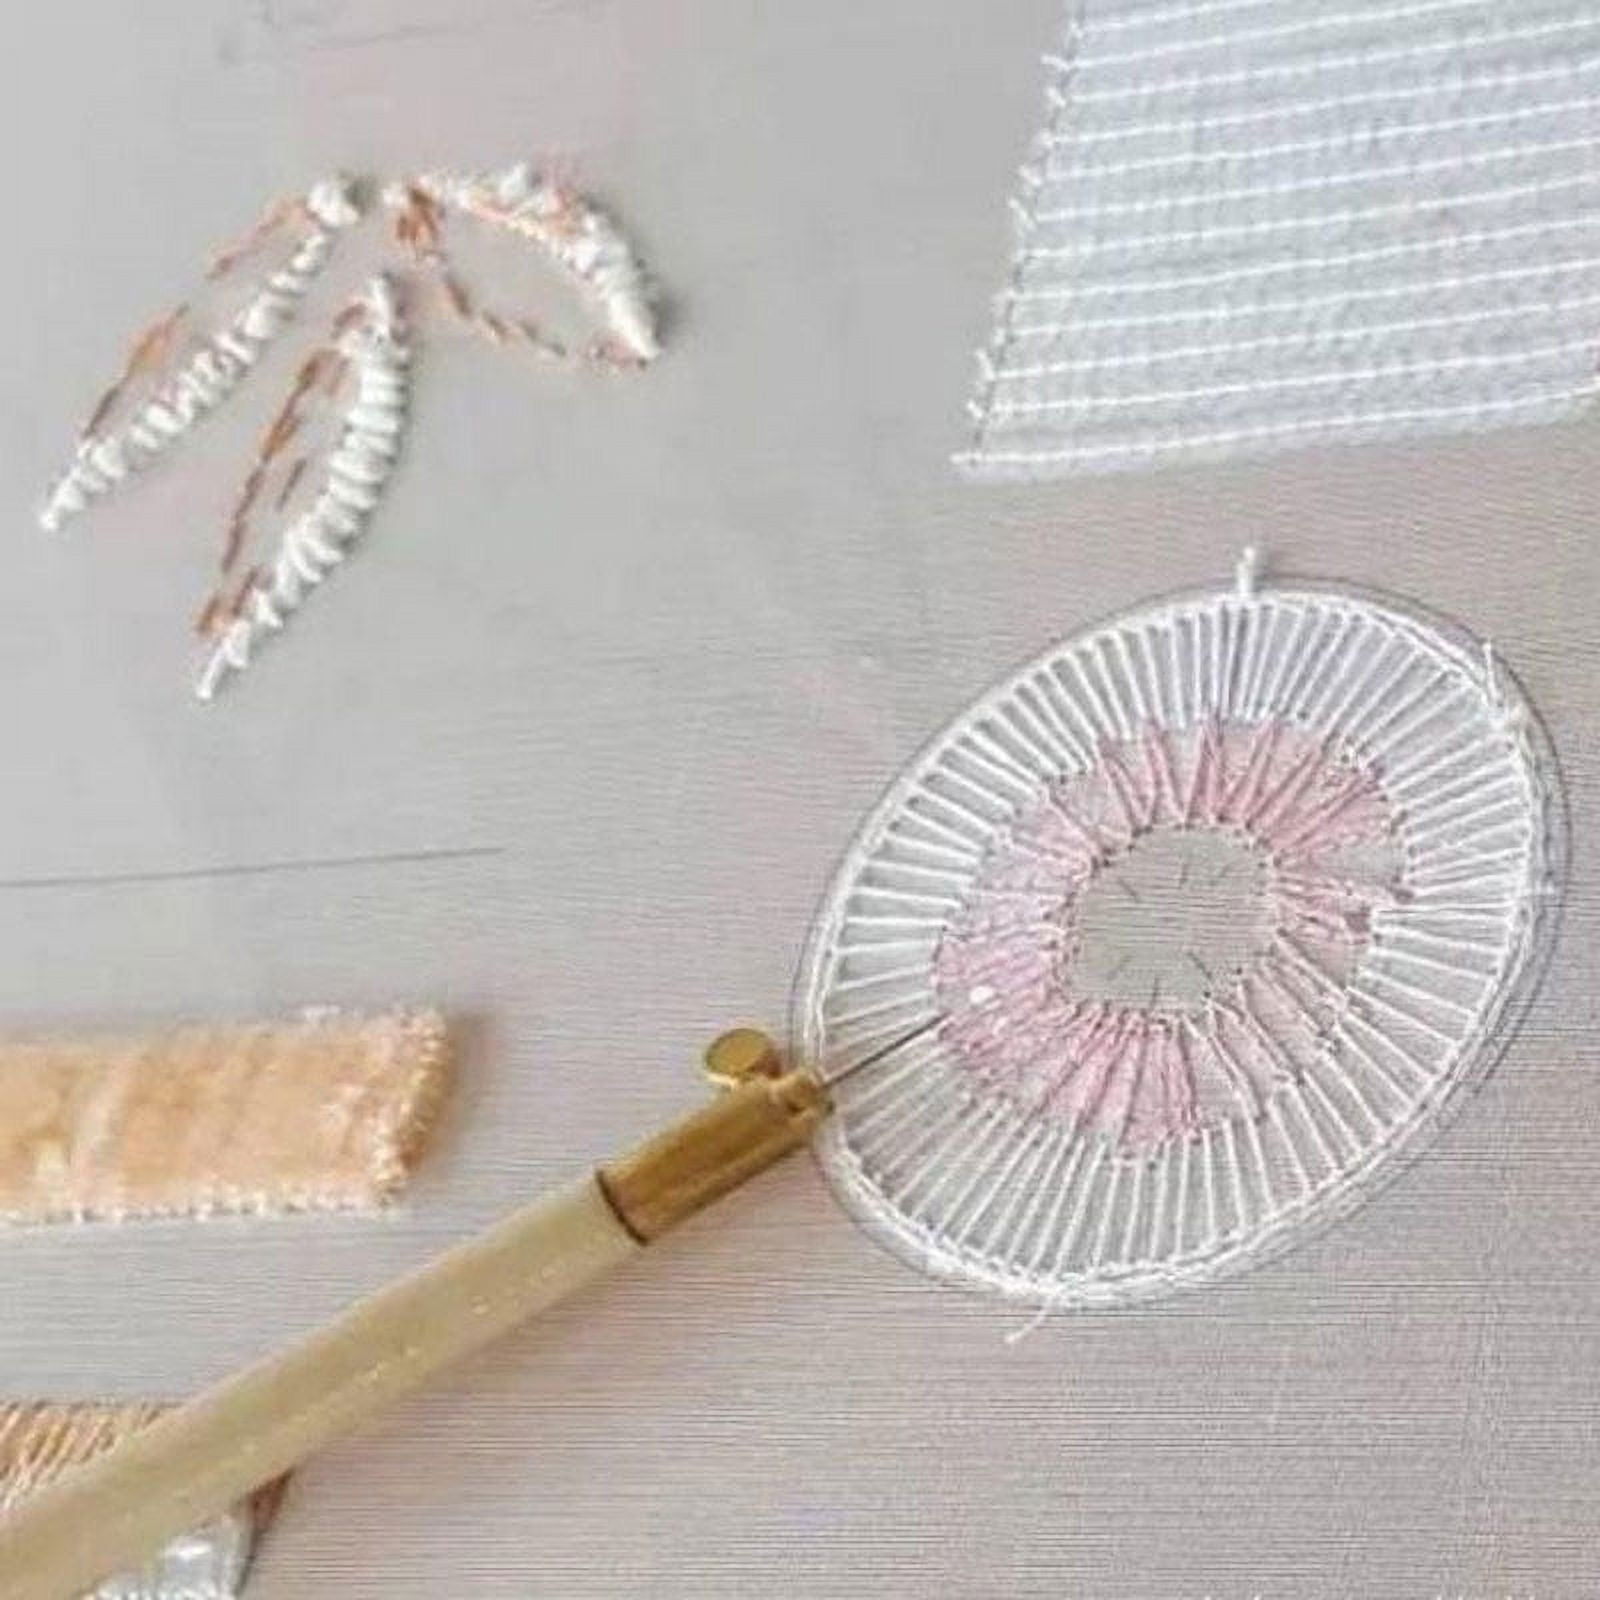 Tambour Hook with 3 Needles, Embroidery Beginner Kit with French Embroidery  Needles Scissors, Embroidery Beading Needle Tools Kit, Crochet Tool Kit